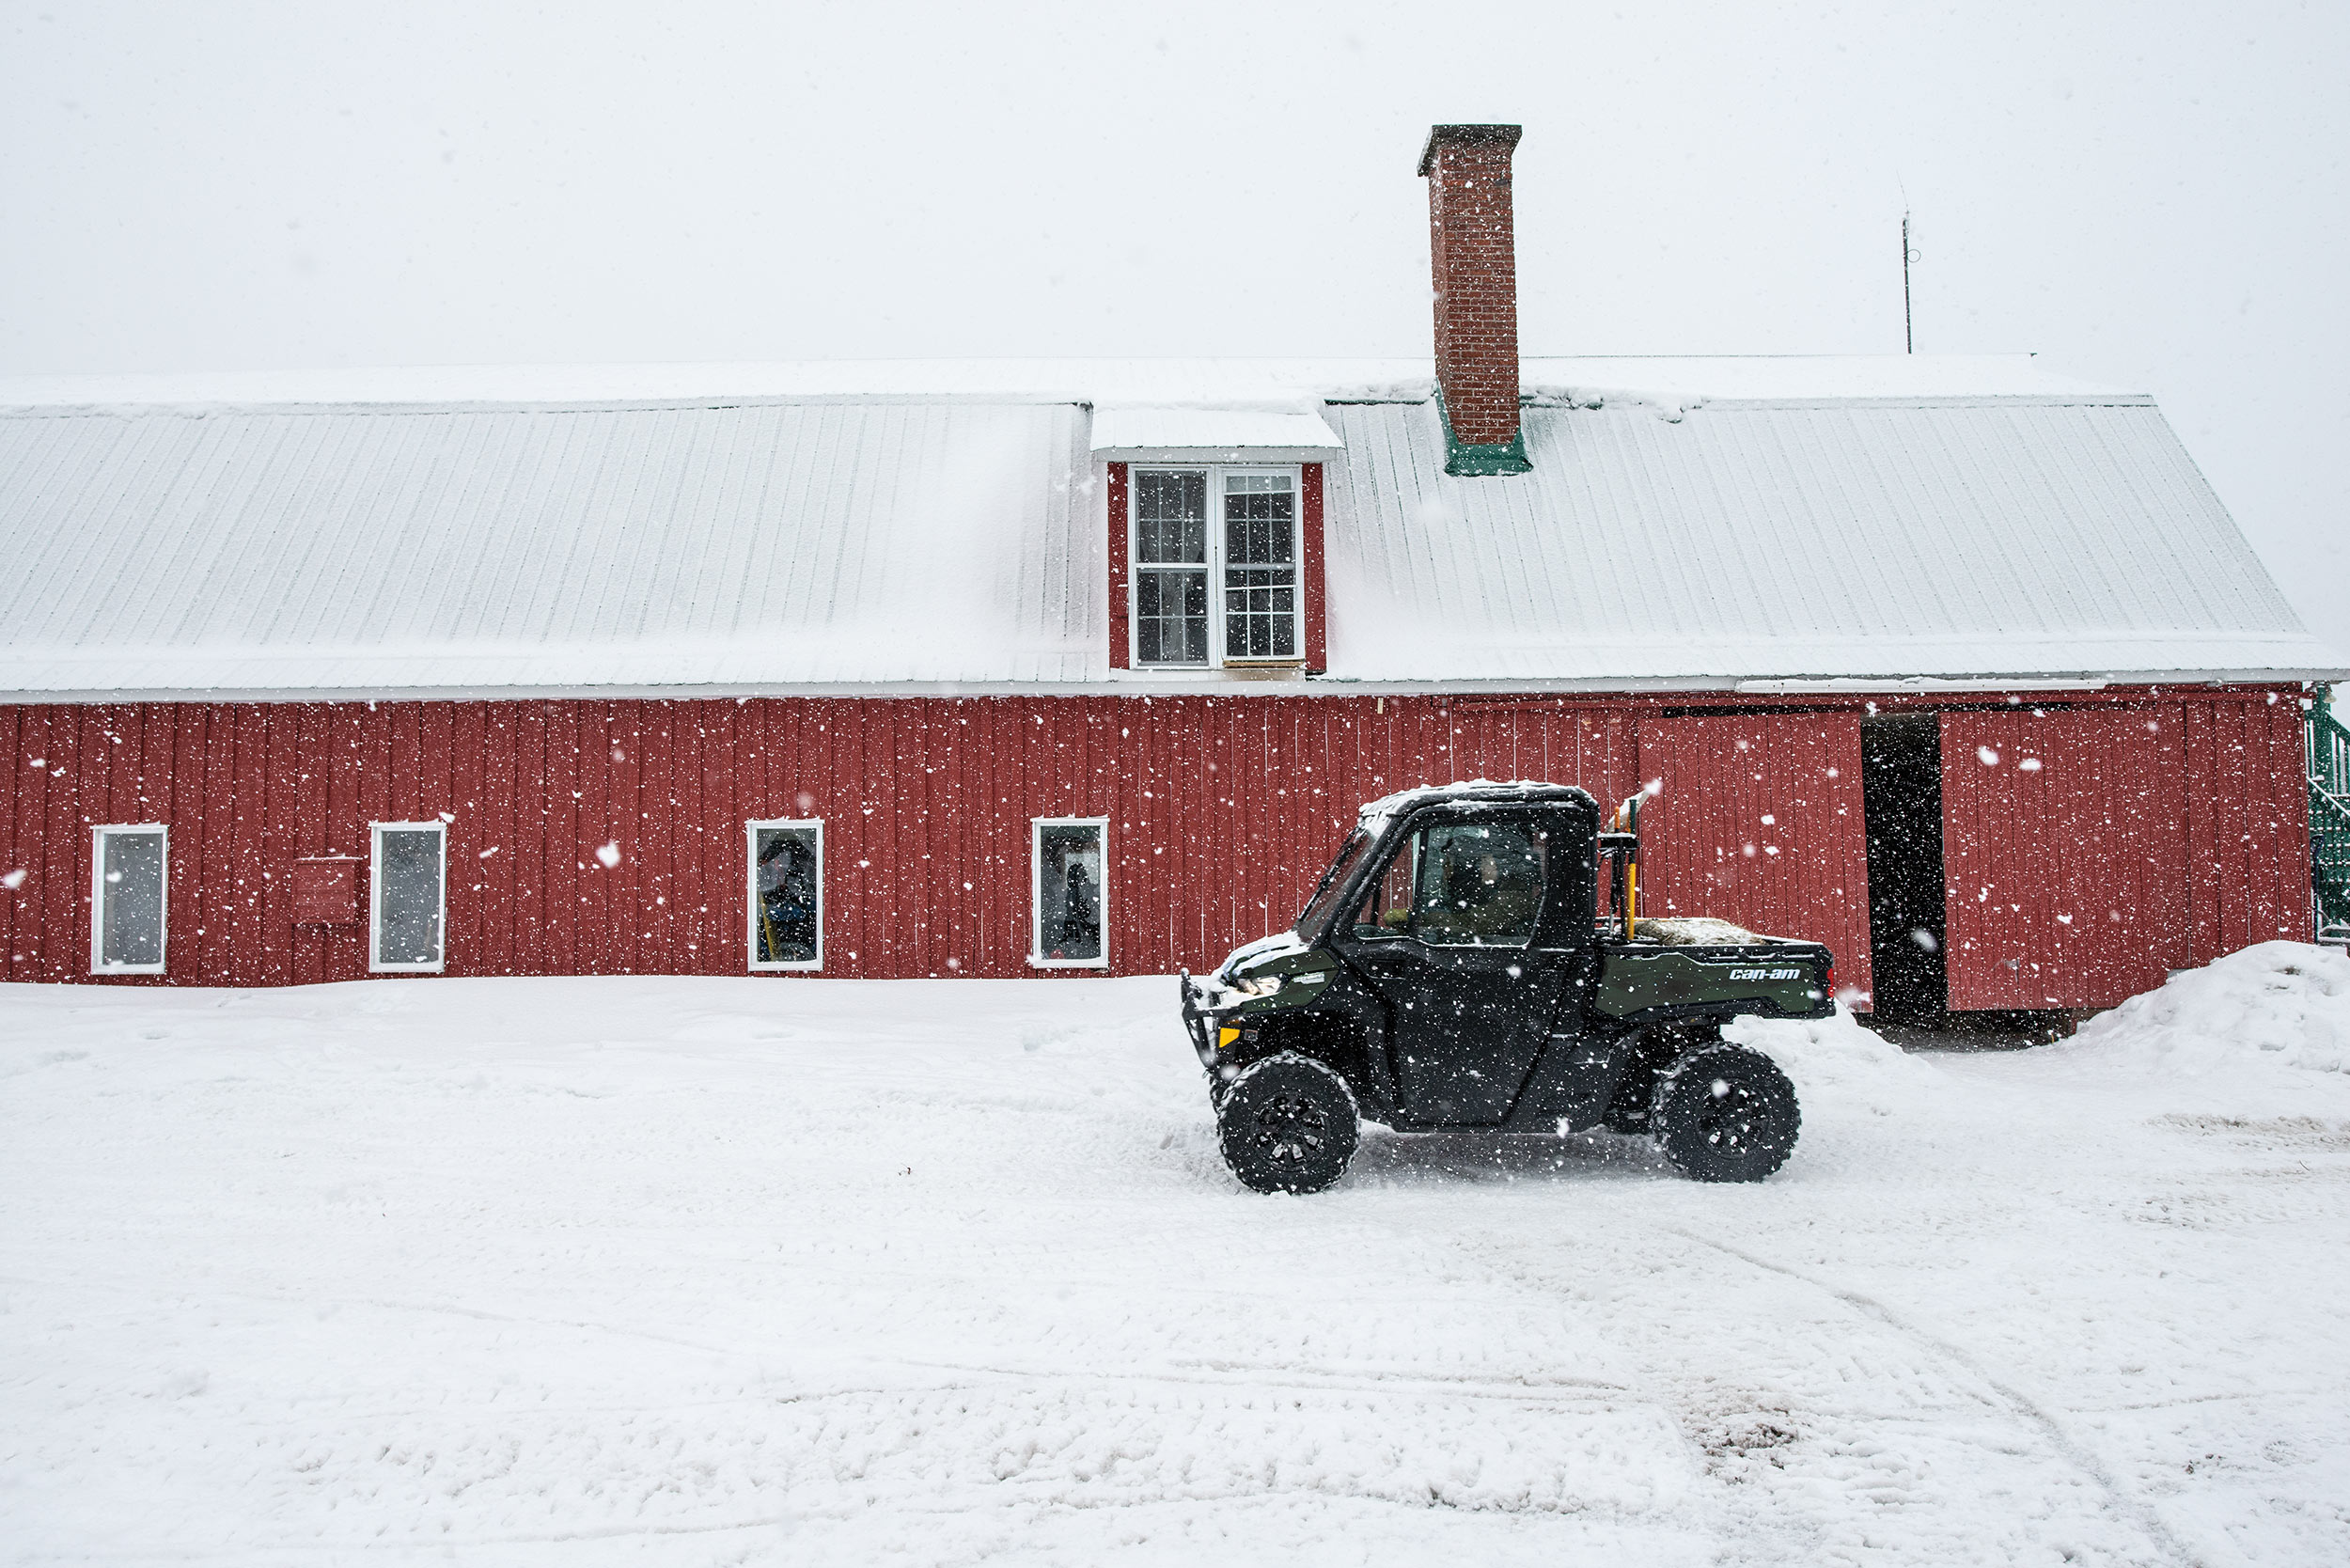 Traxter on snow in a farm